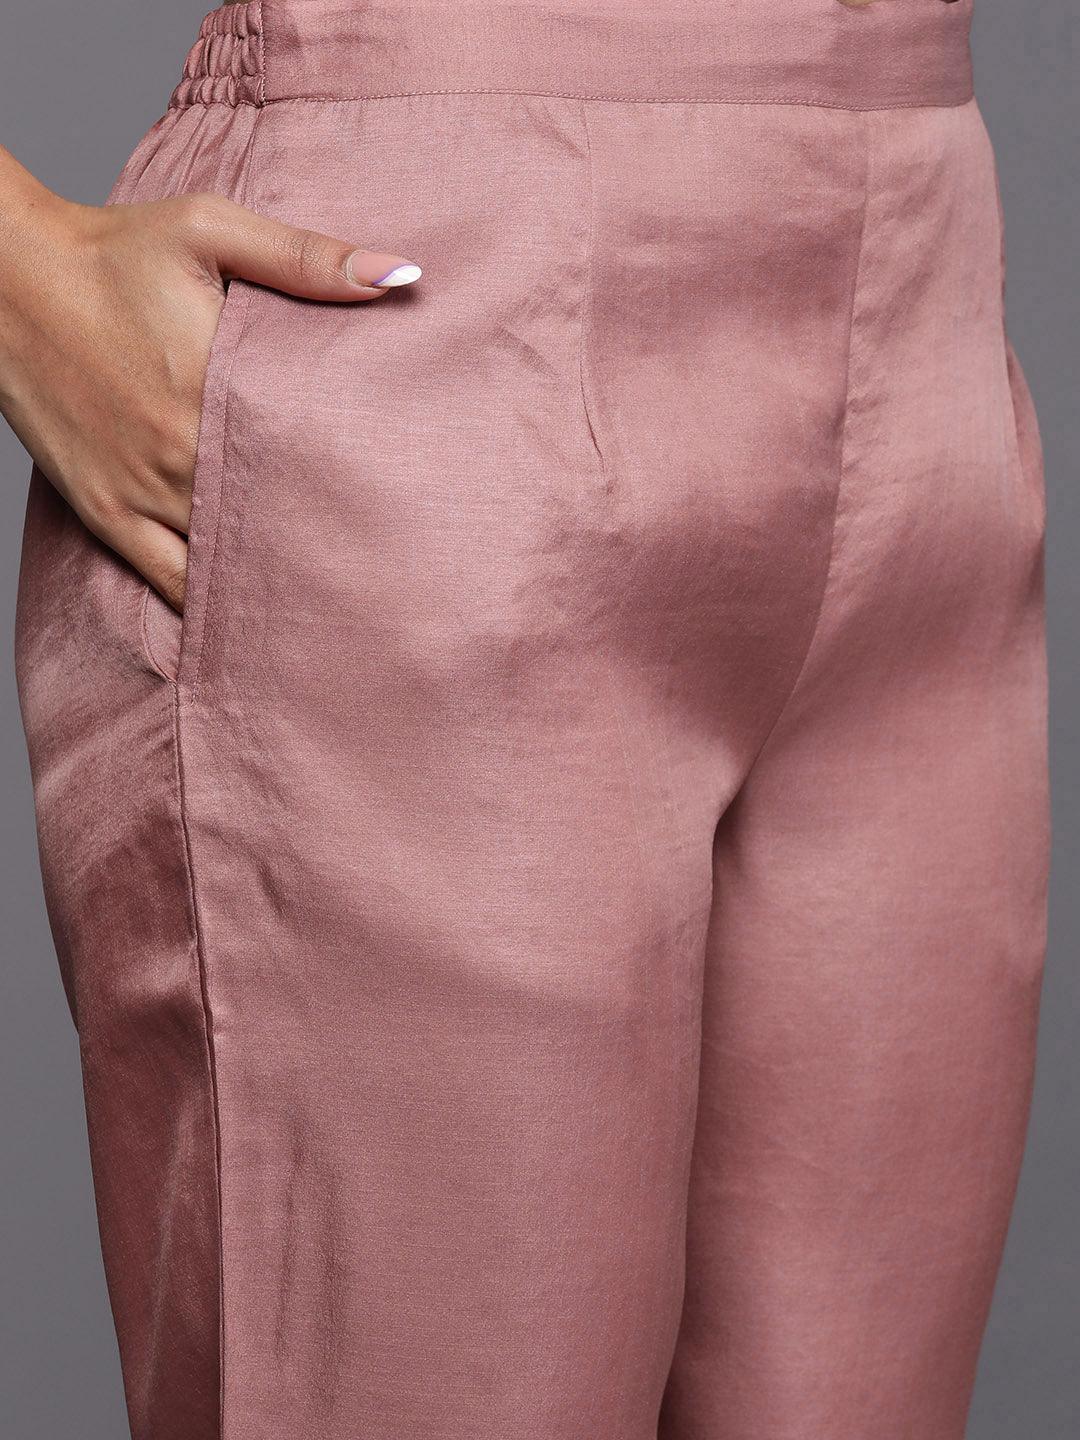 Libas Art Peach Embroidered Silk Blend A-Line Kurta With Trousers & Dupatta - Libas